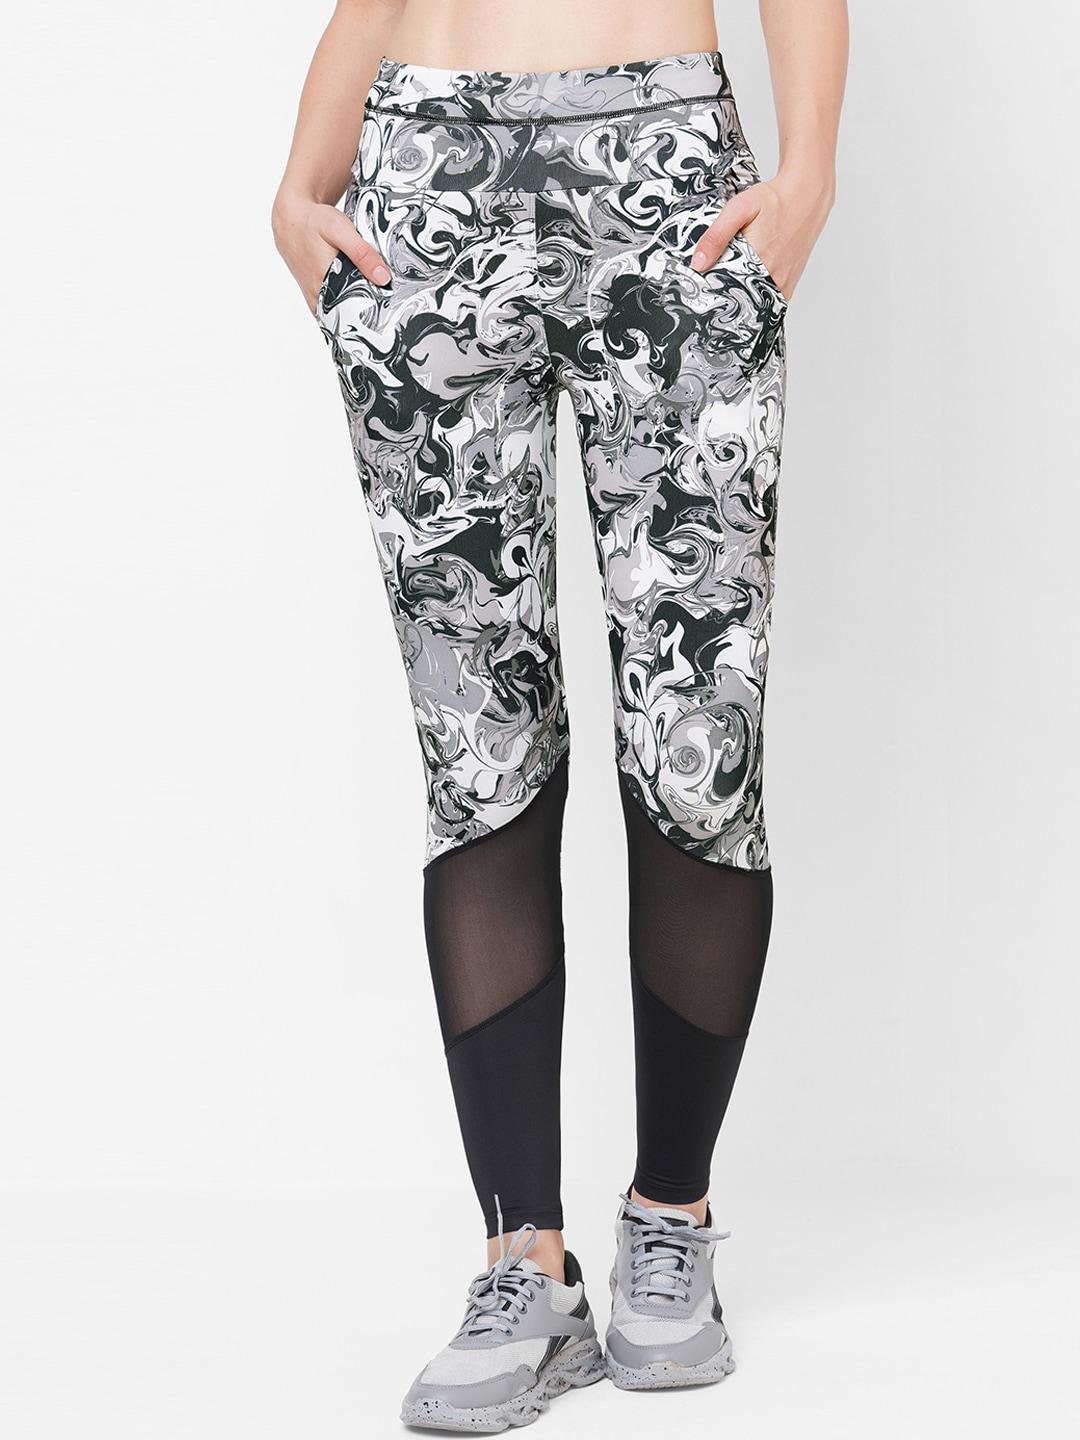 laasa sports women dry-fit printed sports tights